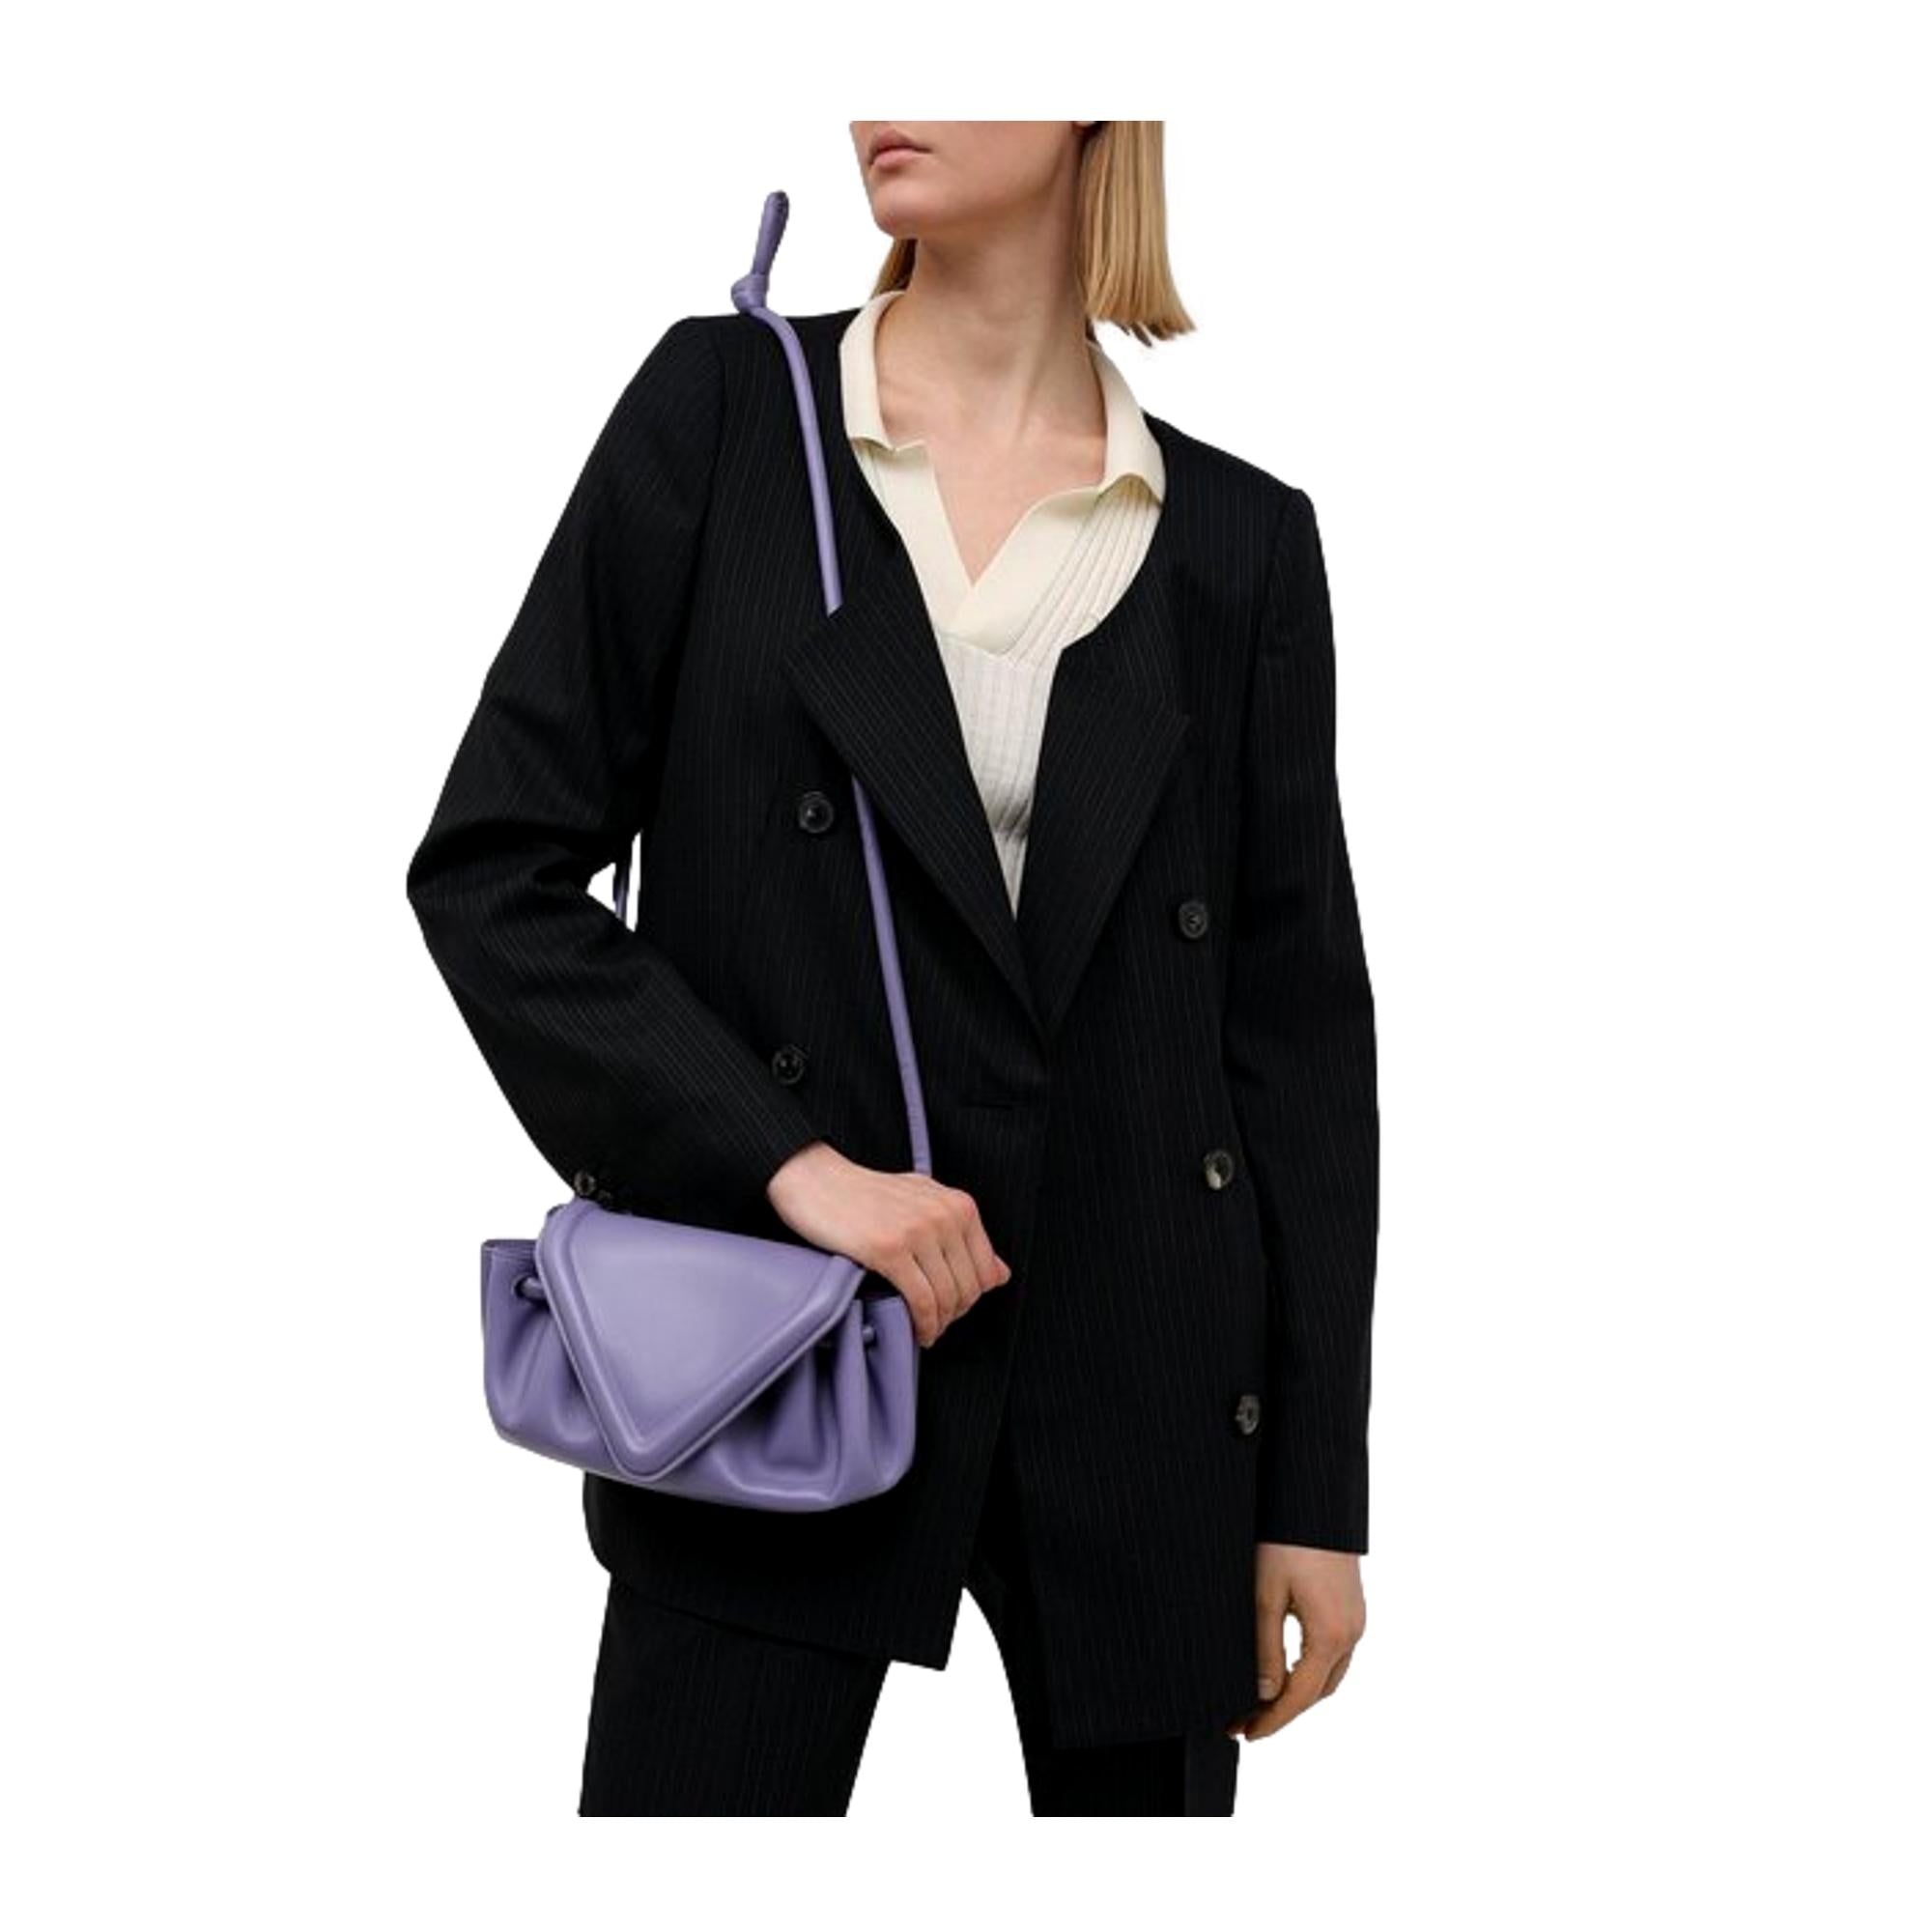 Bottega Veneta Beak Lavender Nappa Leather Small Crossbody Bag